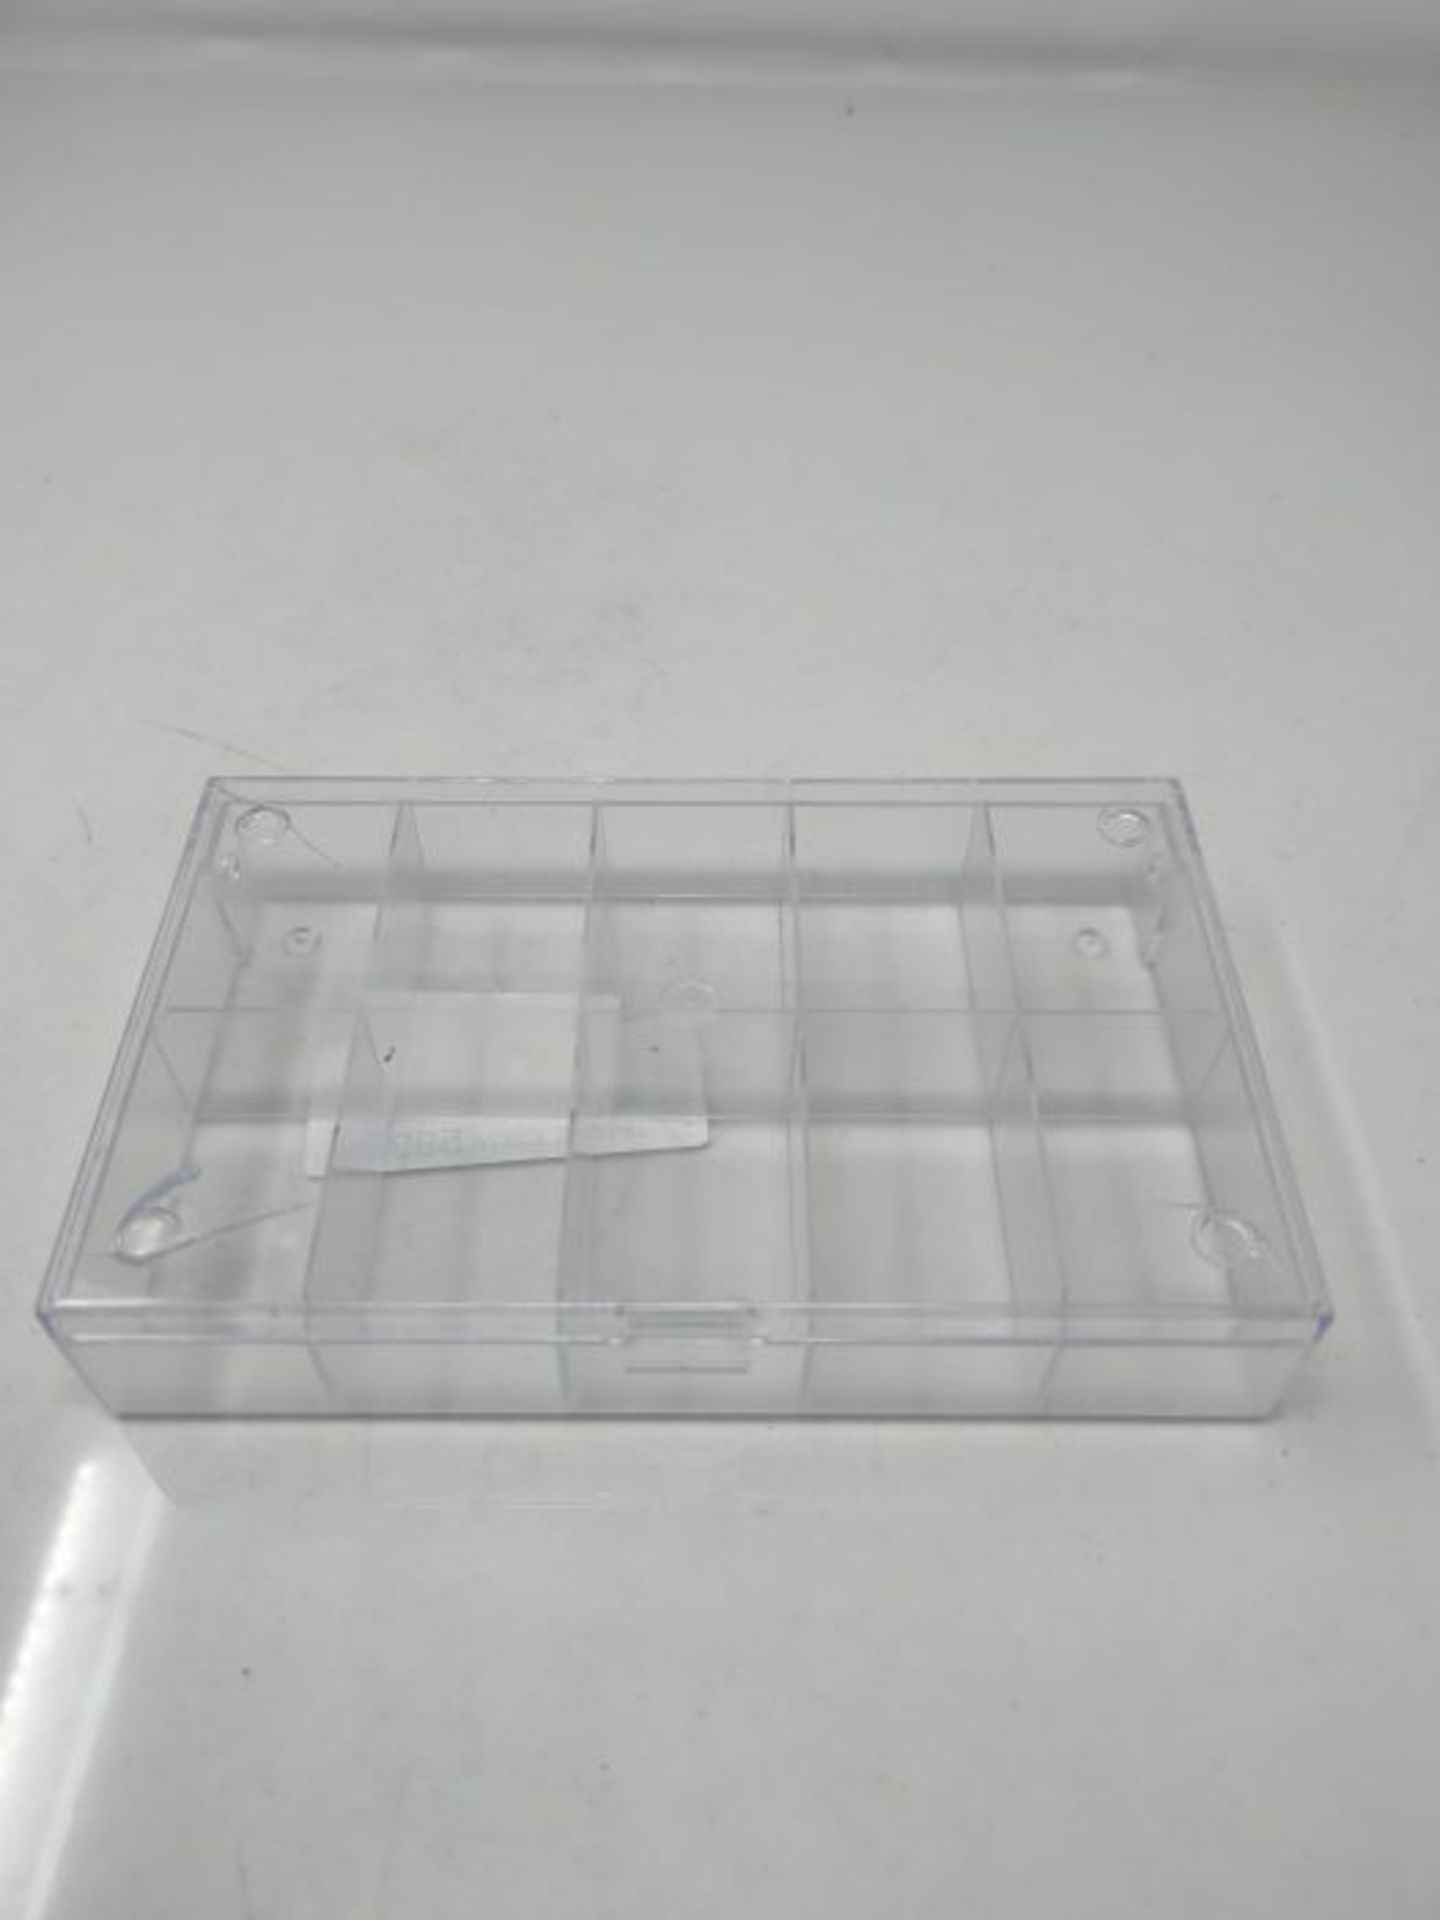 Hipner dowel assortment box (L x W x H) 164 x 31 x 101 mm, number of compartments: 10 - Image 2 of 2